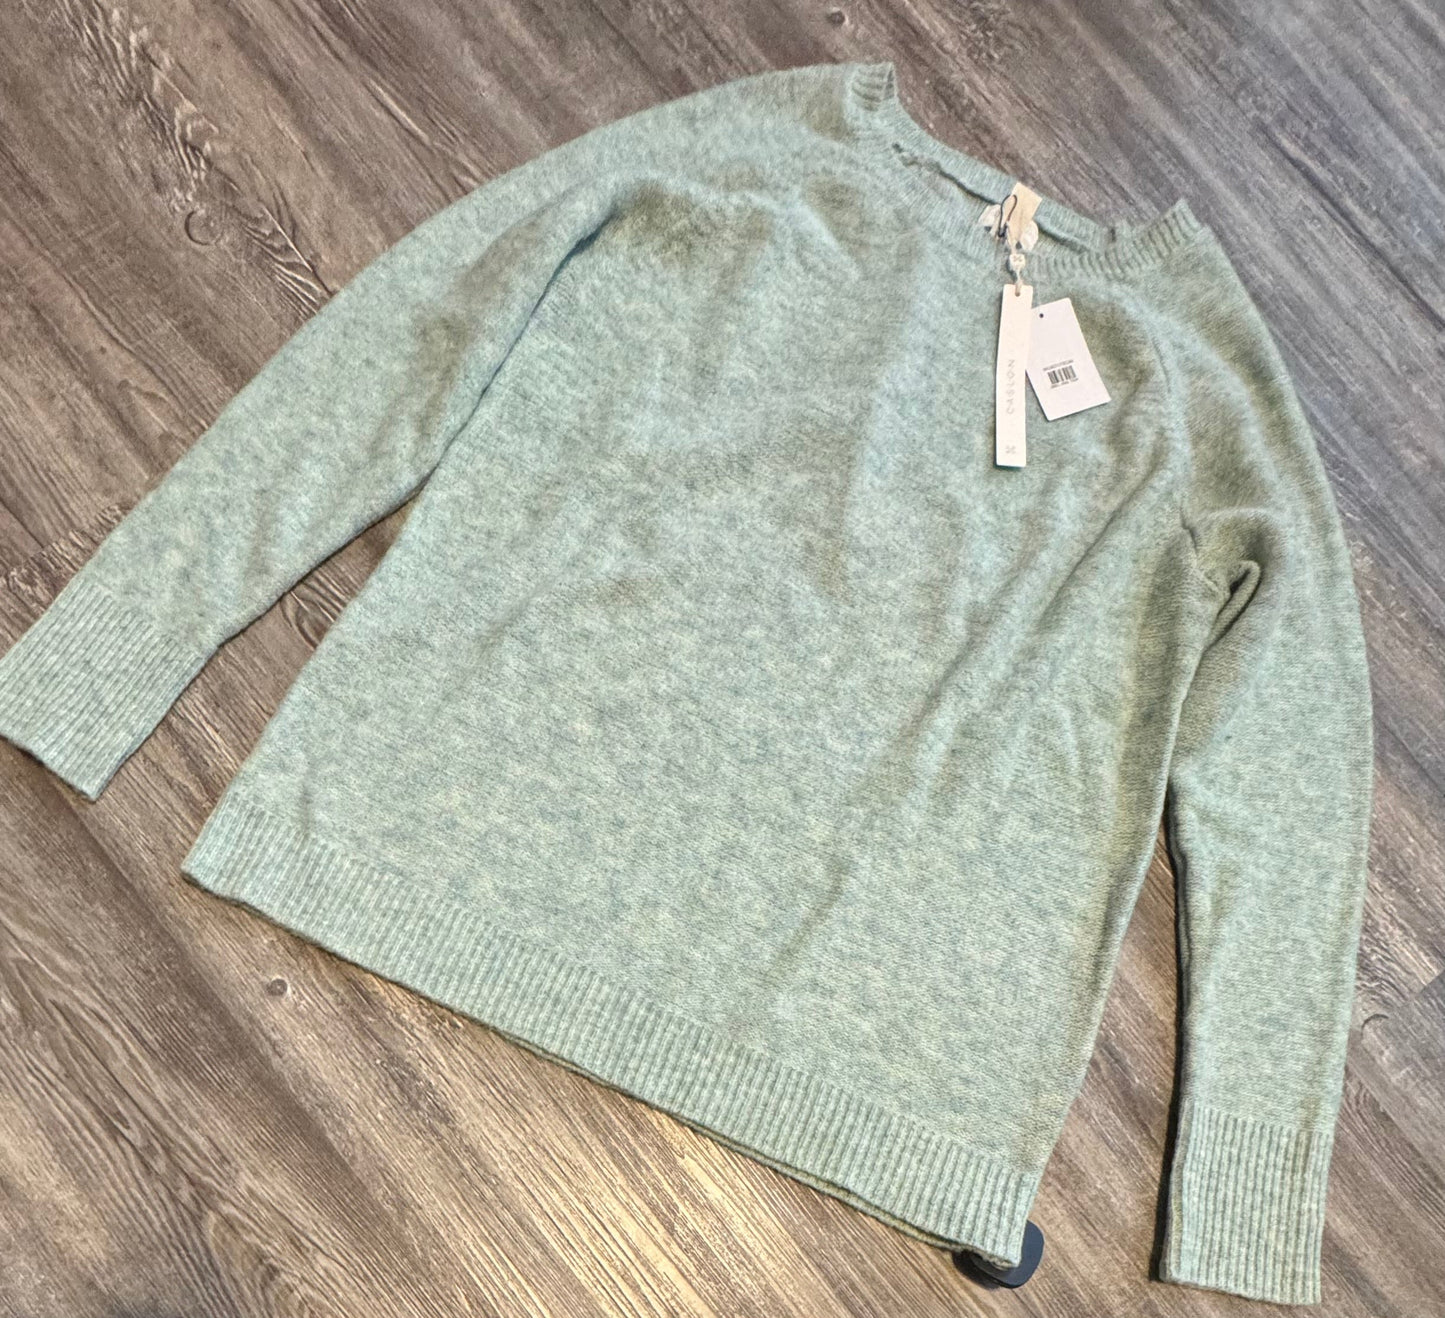 Sweater By Caslon  Size: L